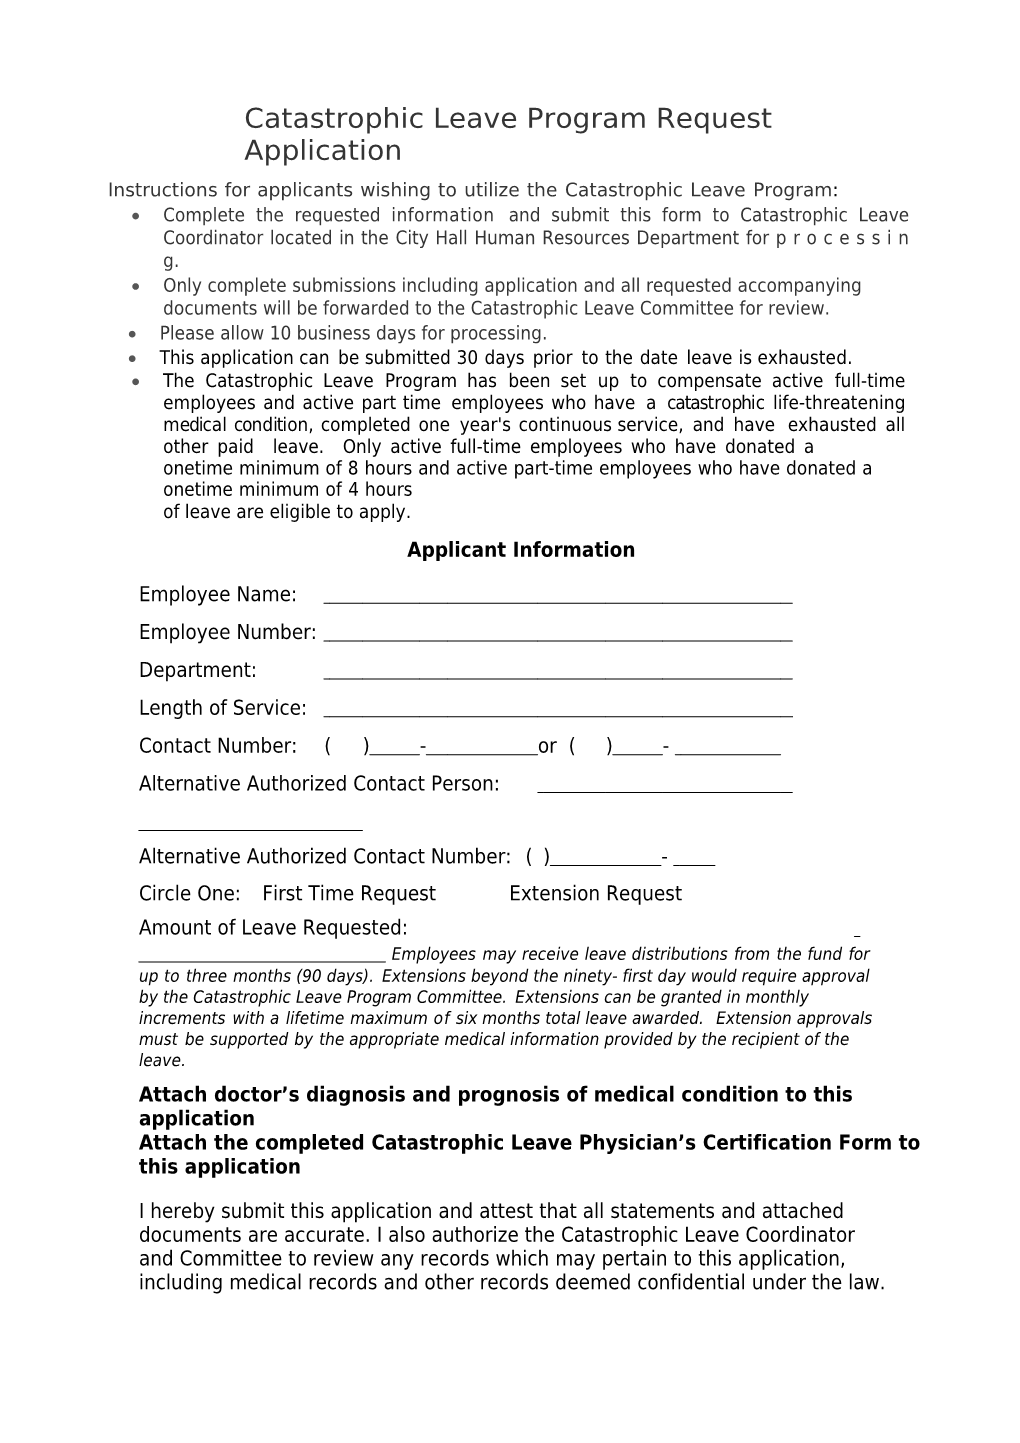 Catastrophic Leave Program Request Application